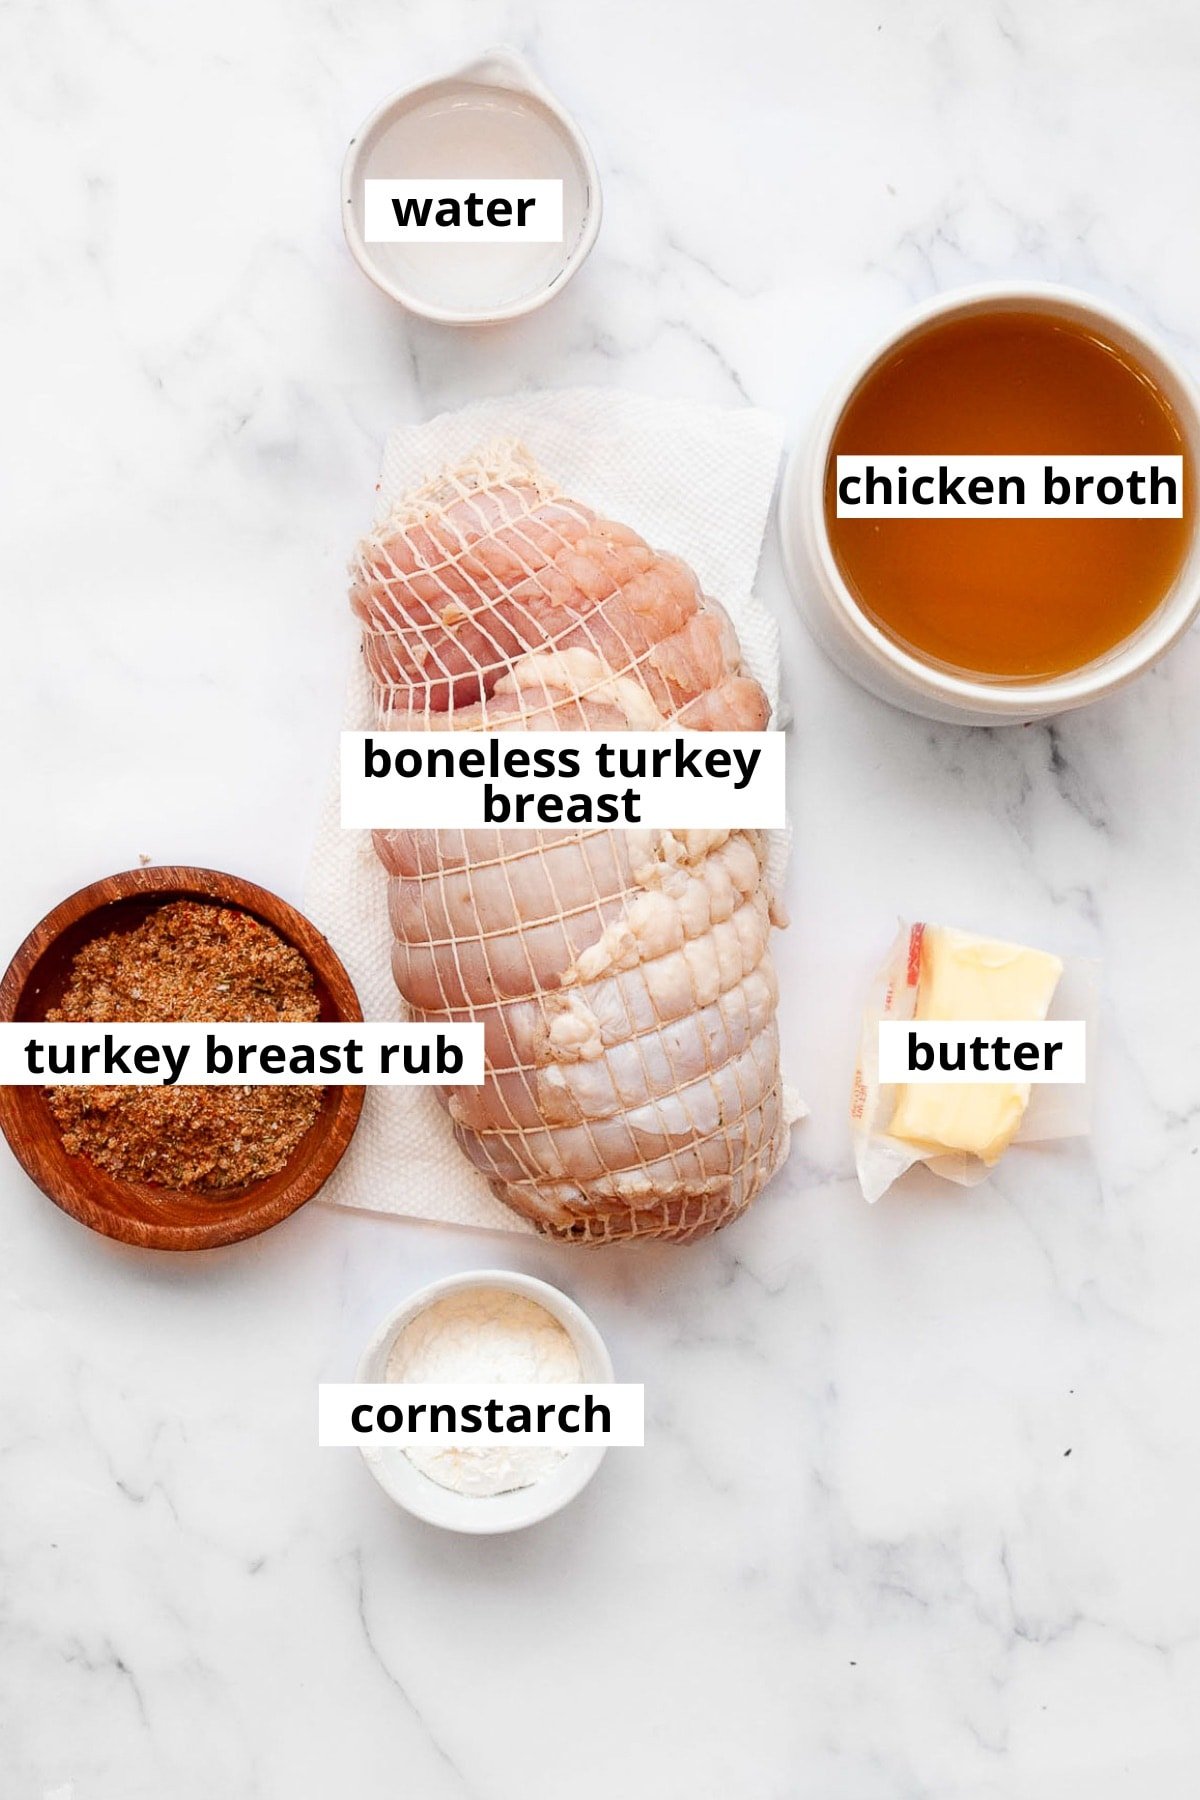 Boneless turkey breast in a mash, chicken broth, turkey breast rub, butter, water, cornstarch.